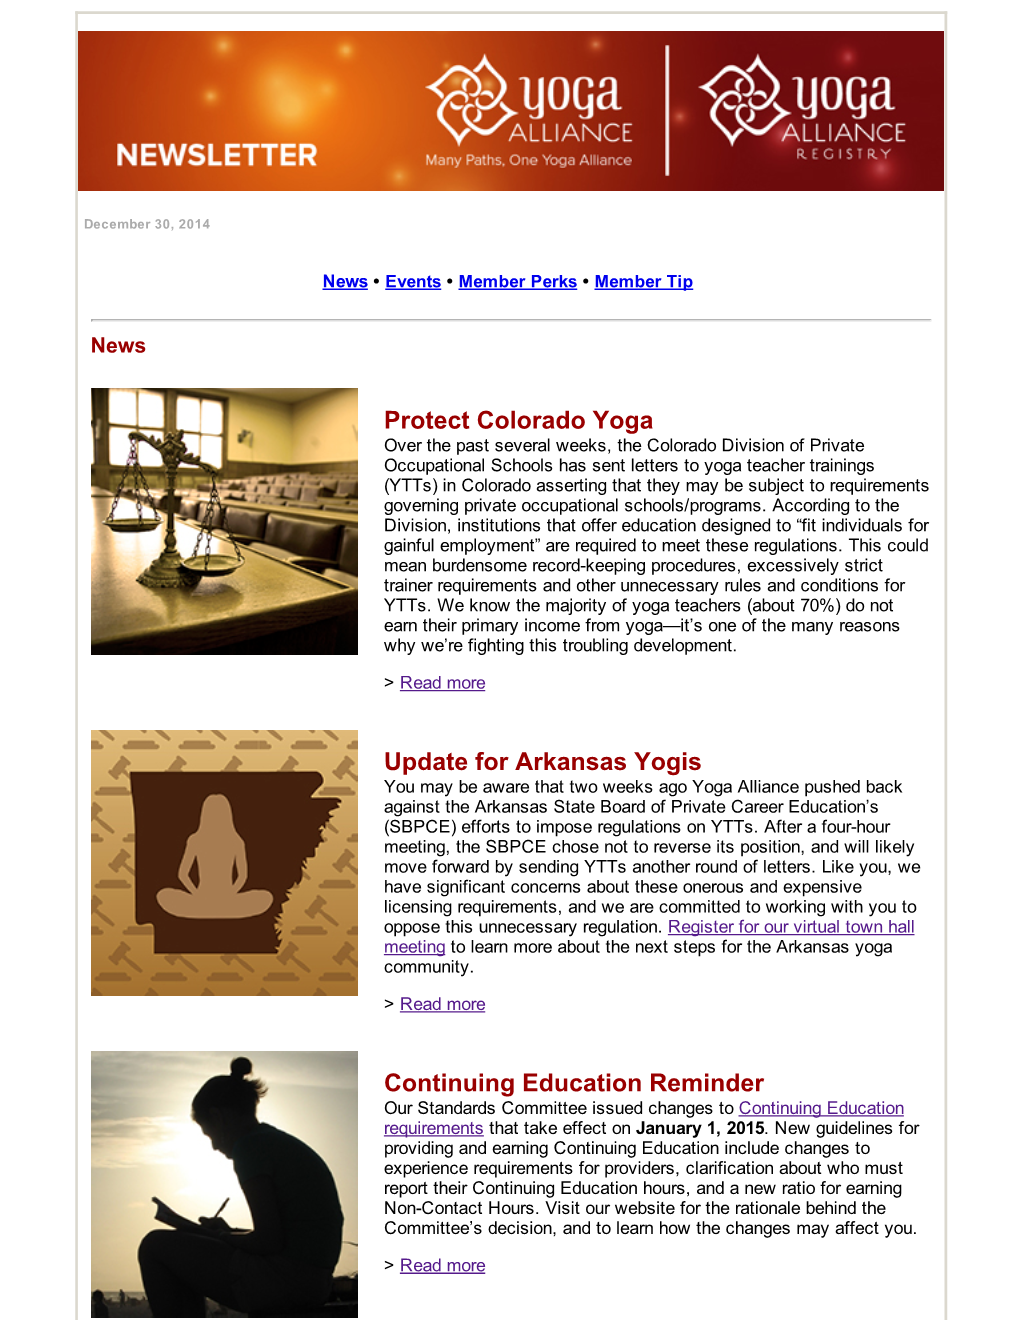 Protect Colorado Yoga Update for Arkansas Yogis Continuing